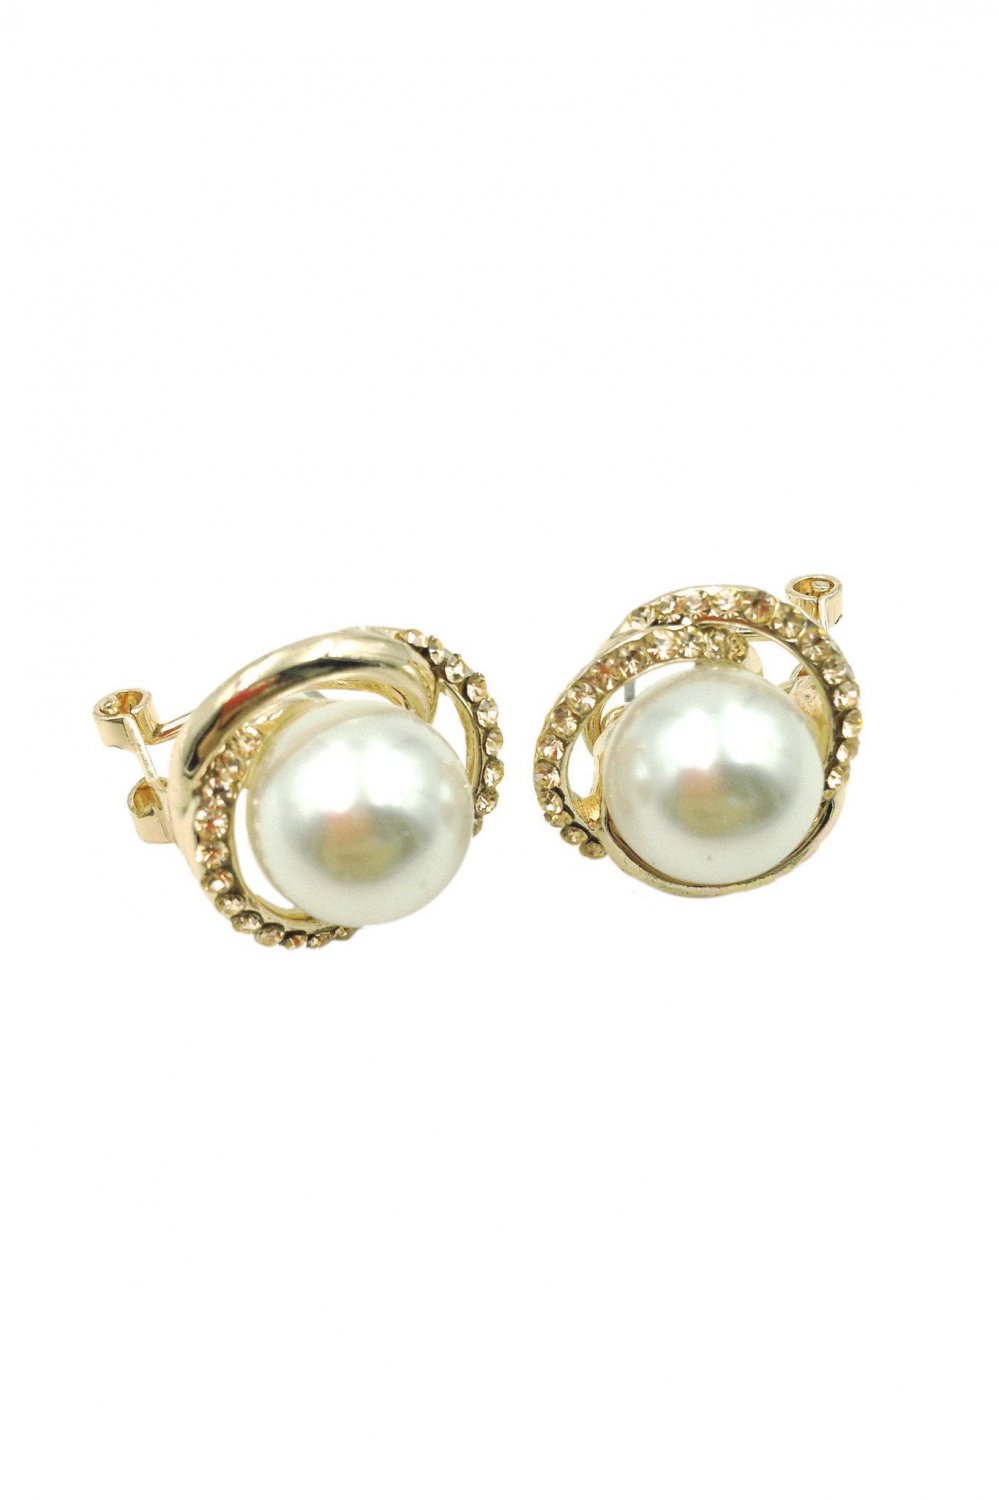 Gold fashion pearl earrings